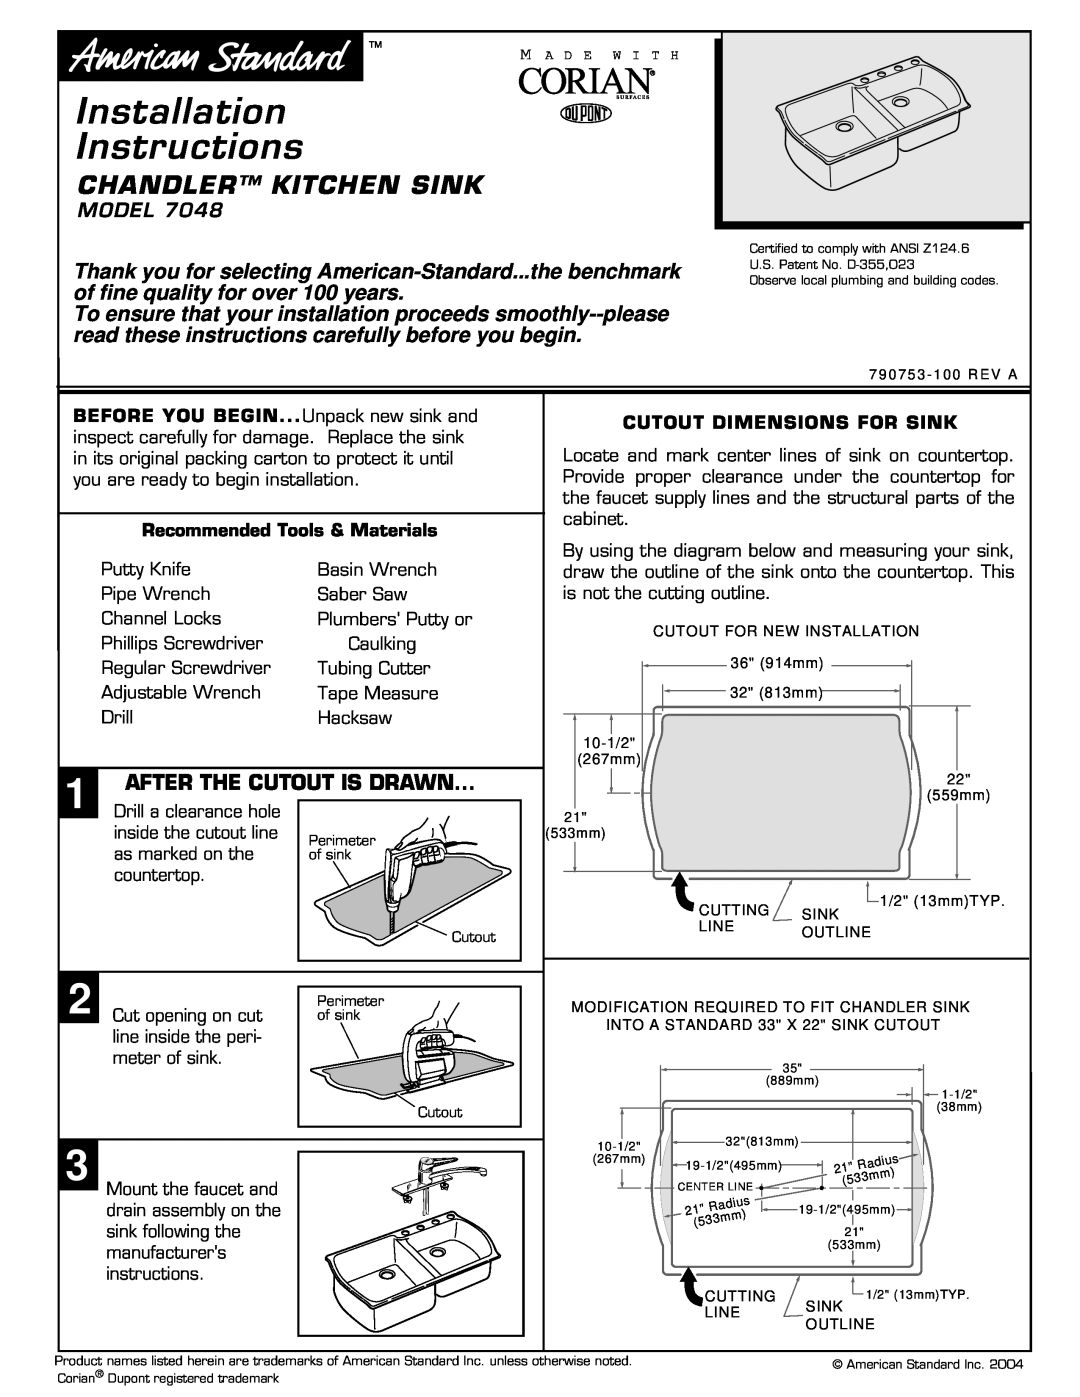 American Standard 7048 installation instructions Installation Instructions, Chandler Kitchen Sink 